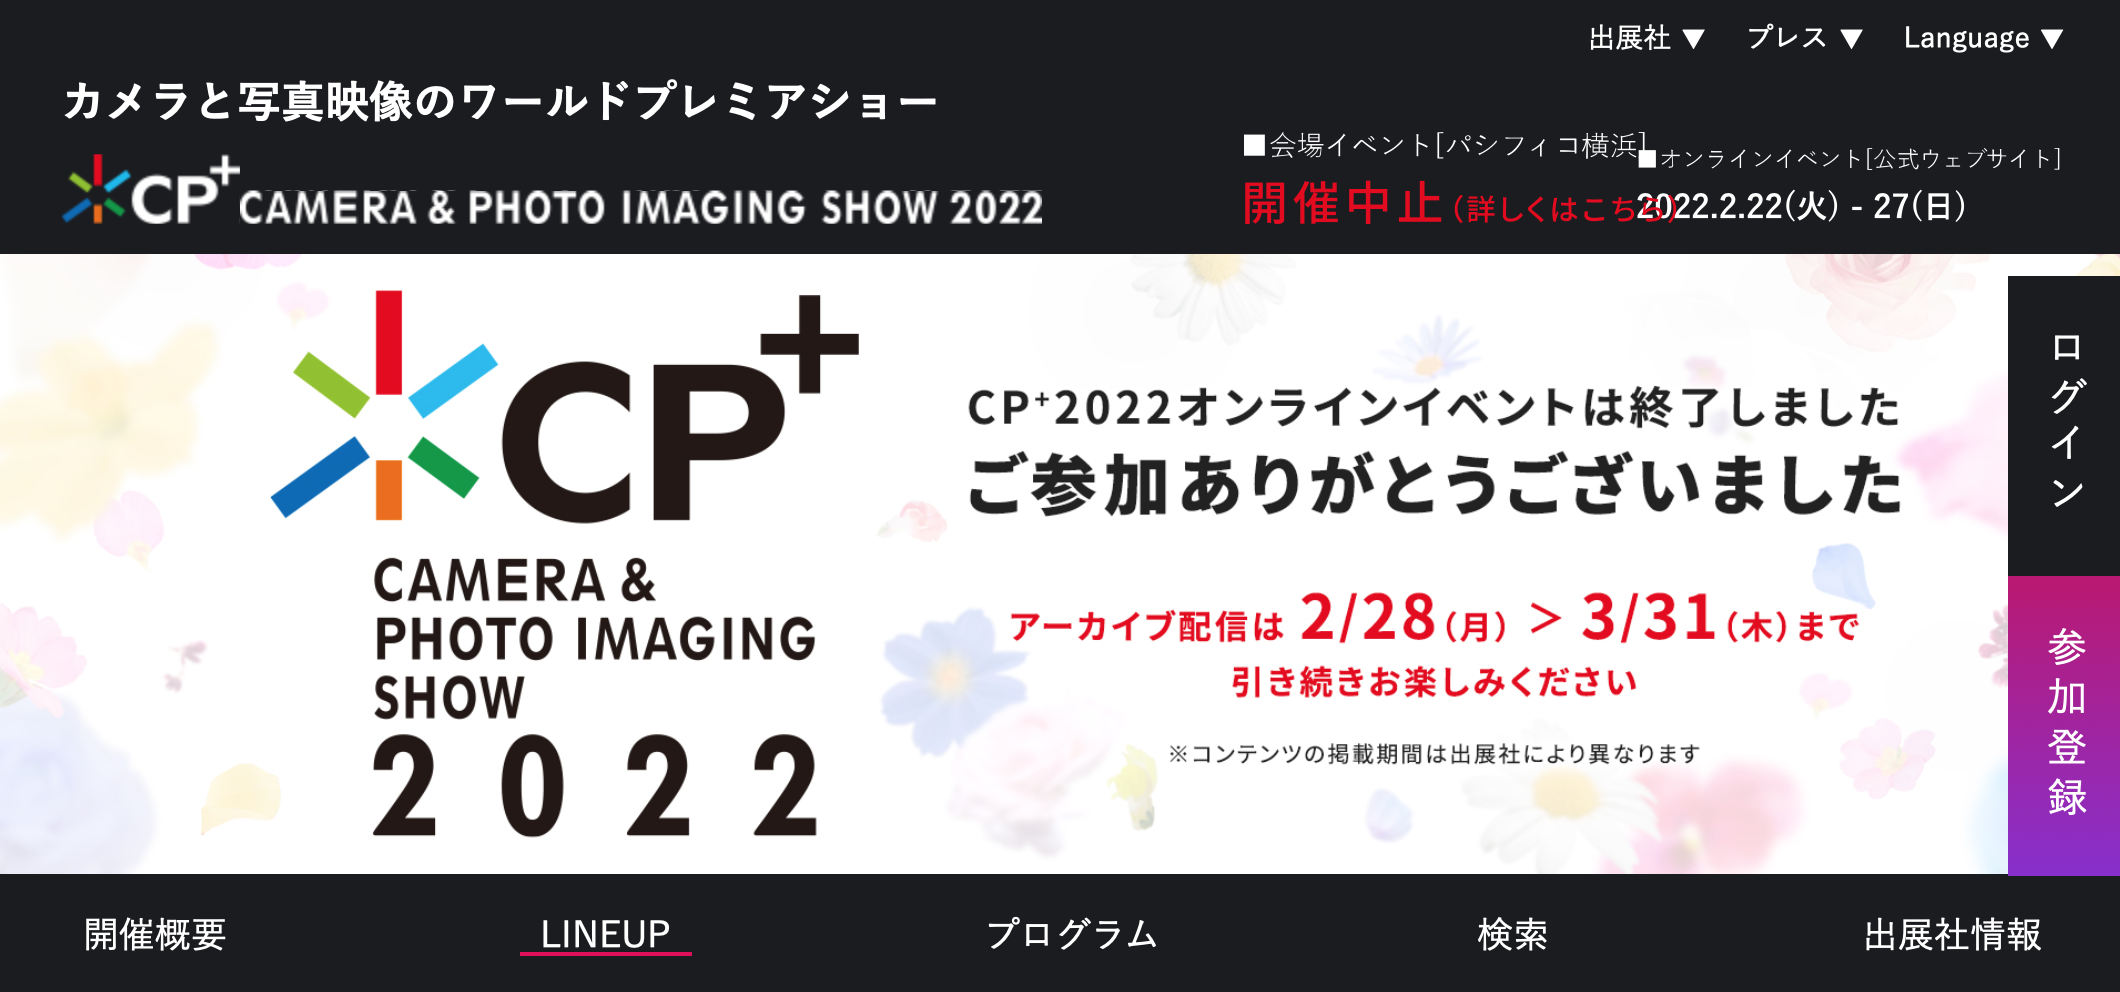 CP＋2022